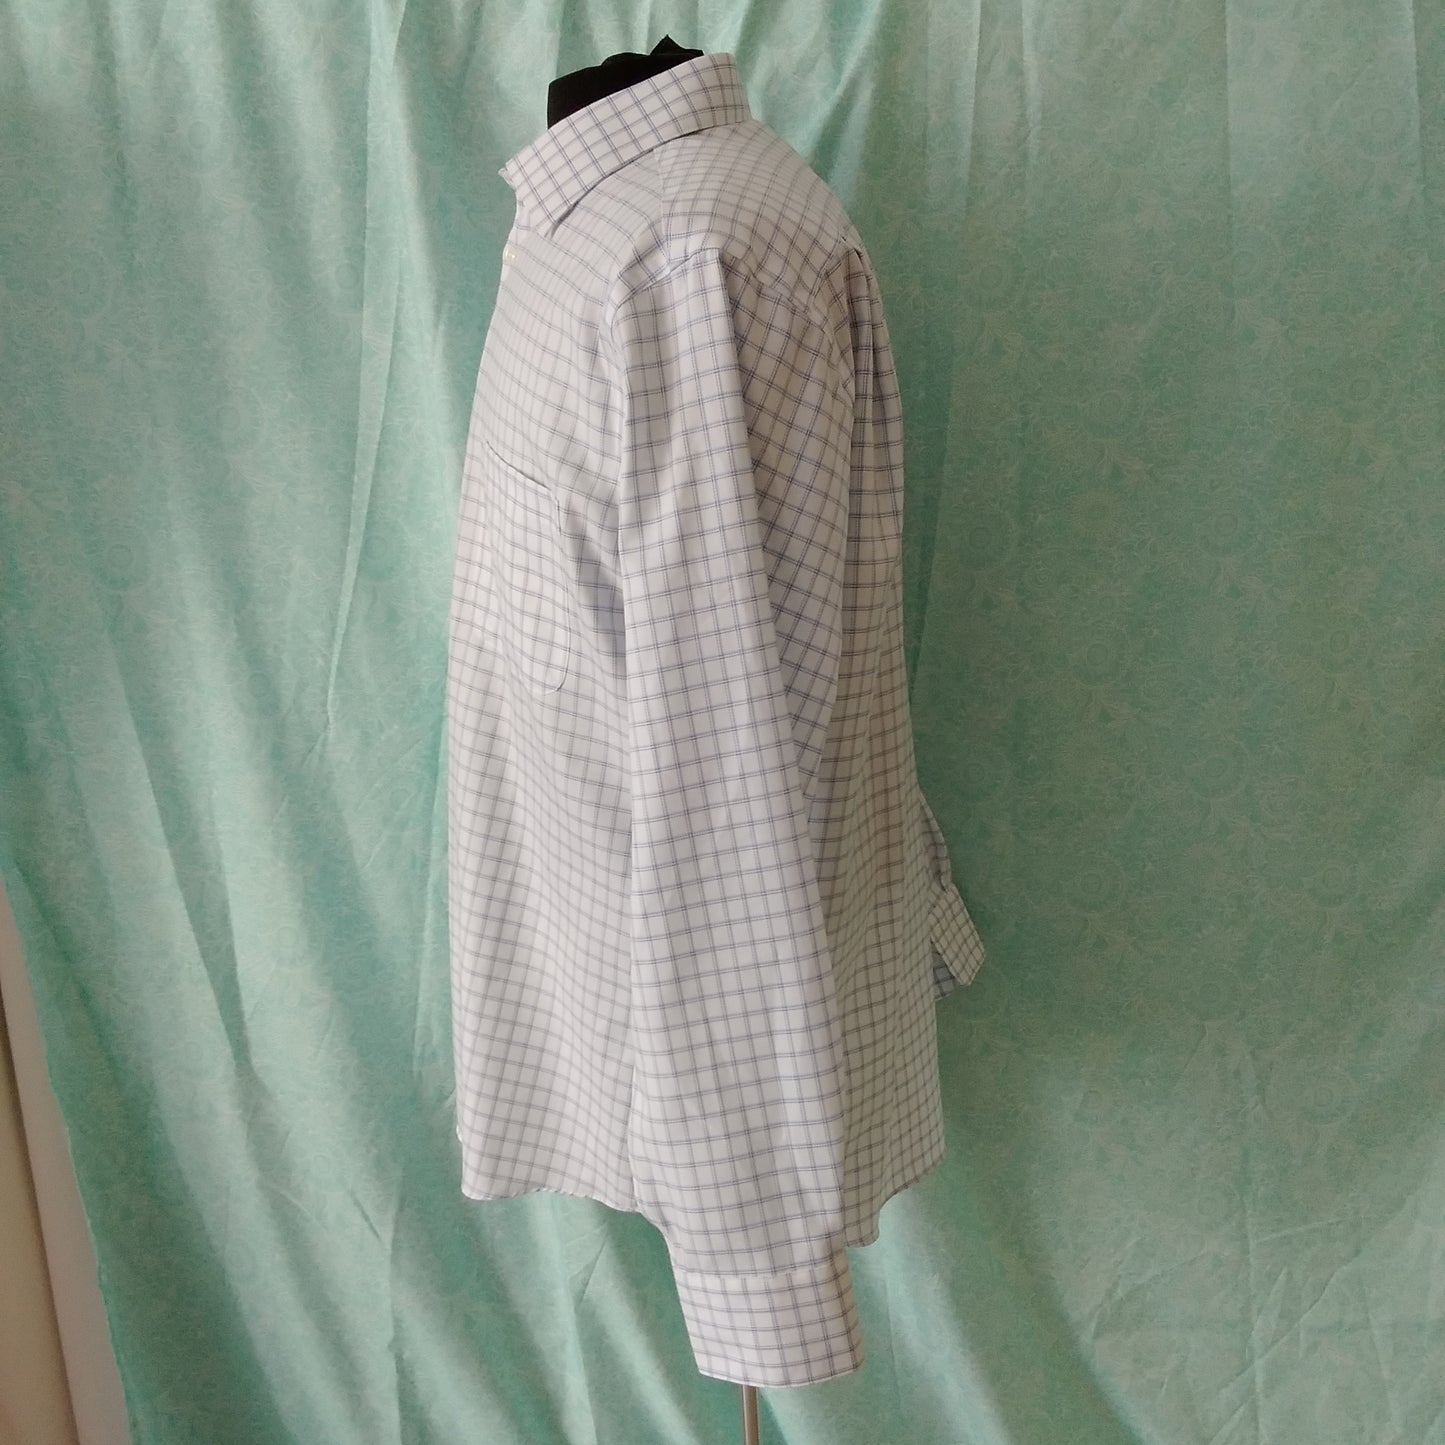 NWT - Pronto Uomo Men's Blue White Checkered Shirt - 16.5 34/35